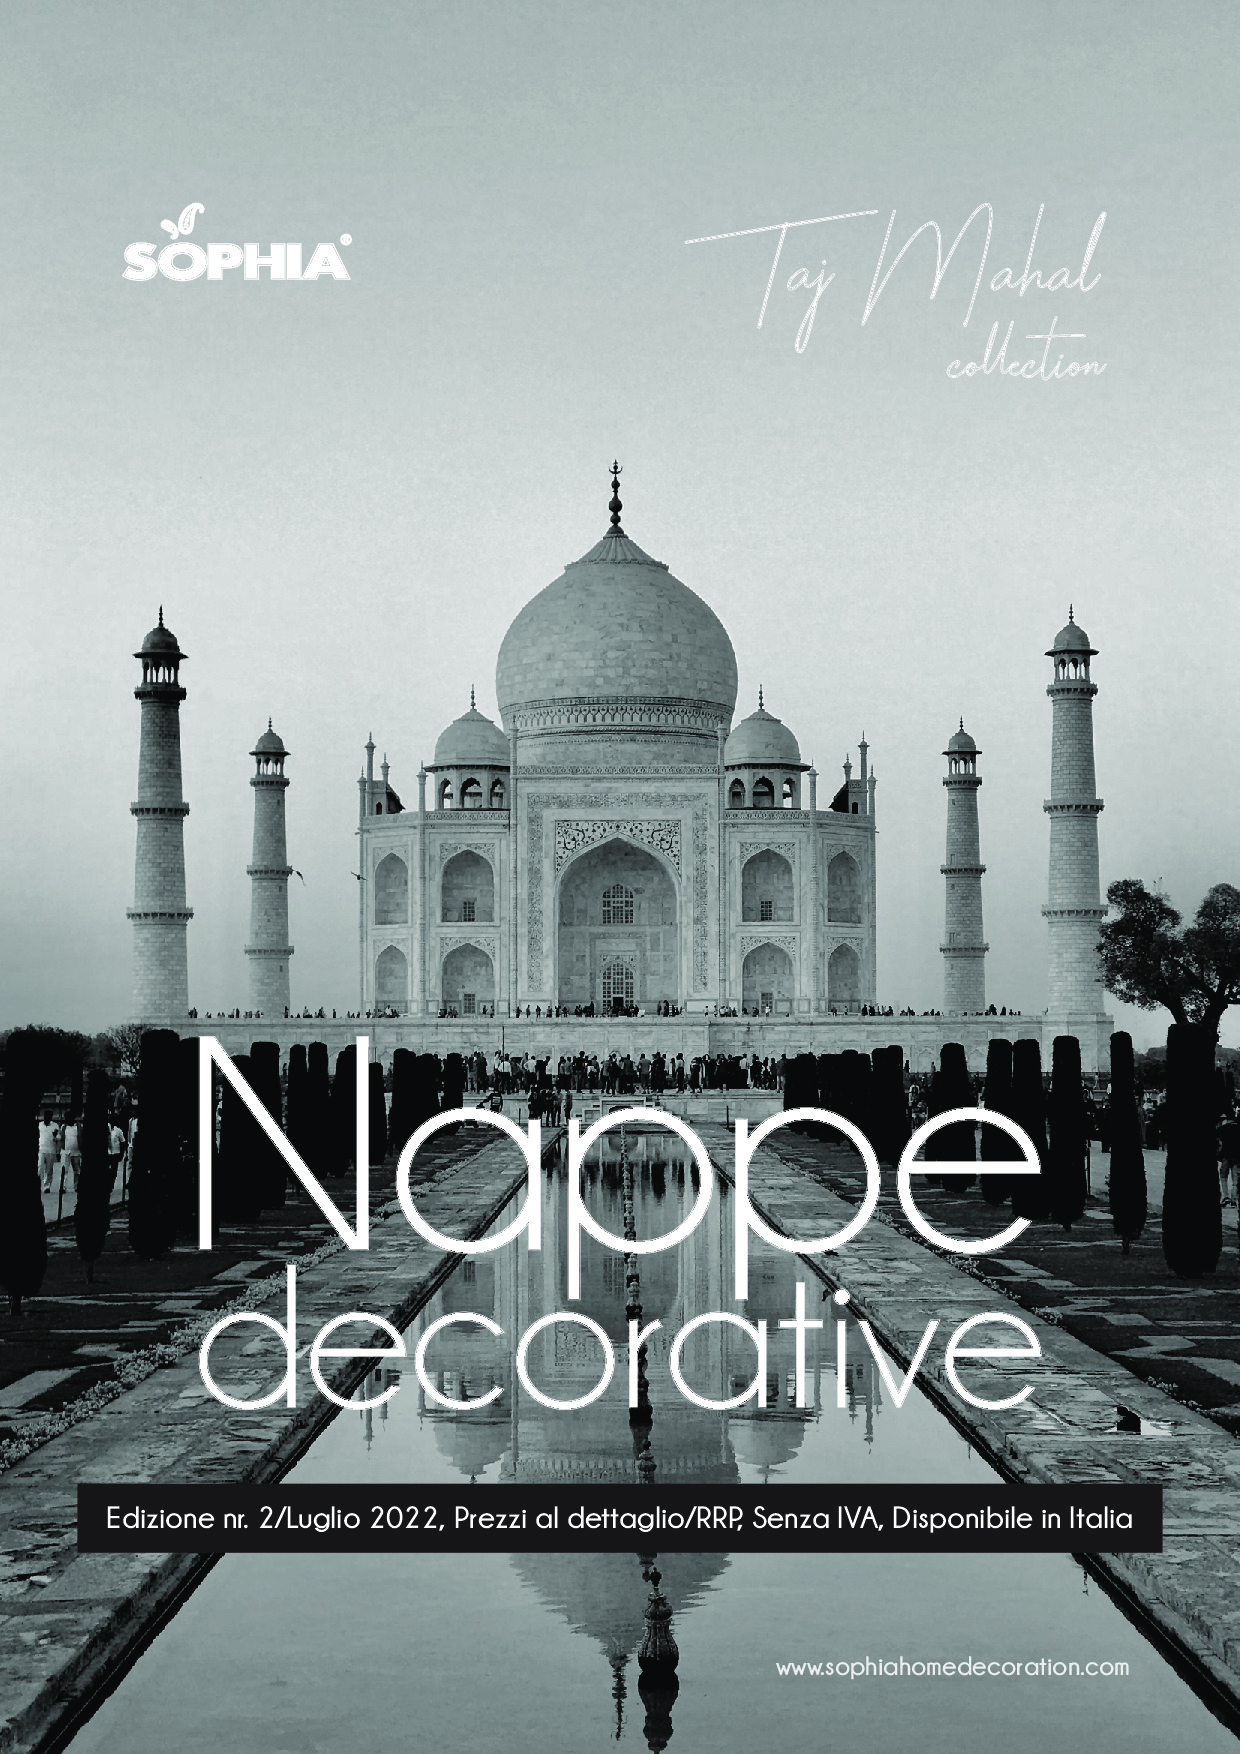 Nappe Decorative